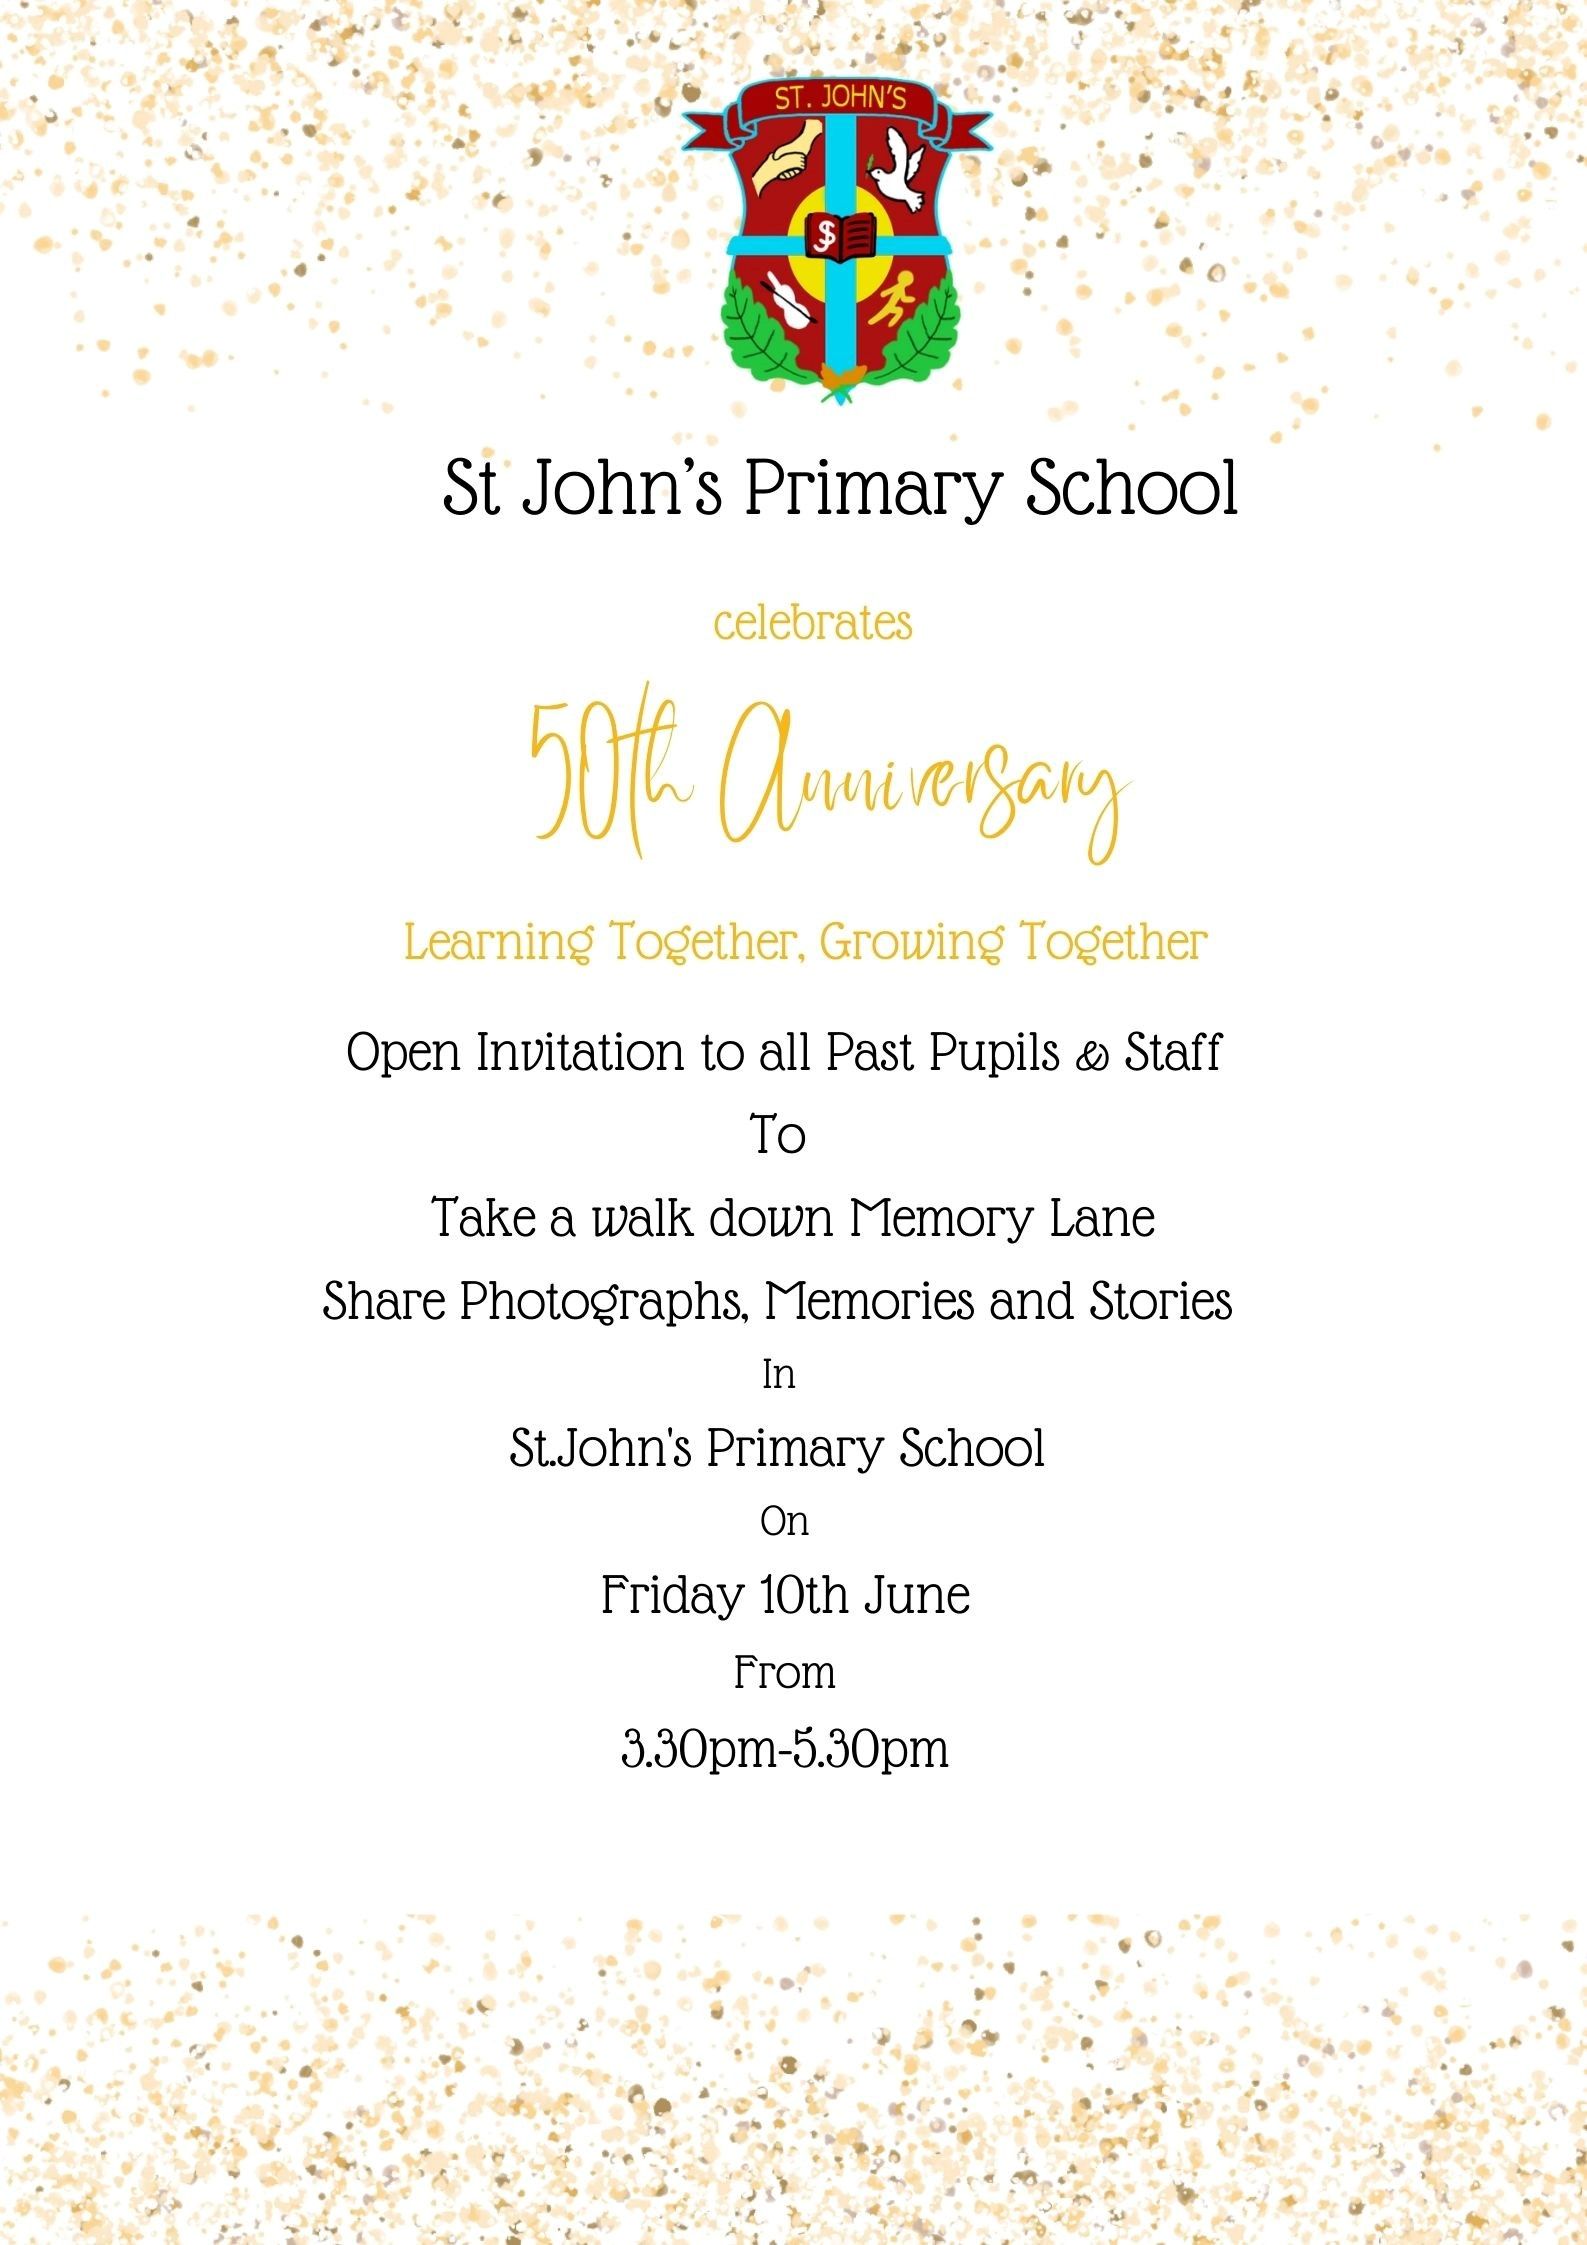 St. John's P.S 50th Anniversary Invite (Past Pupils & Staff)